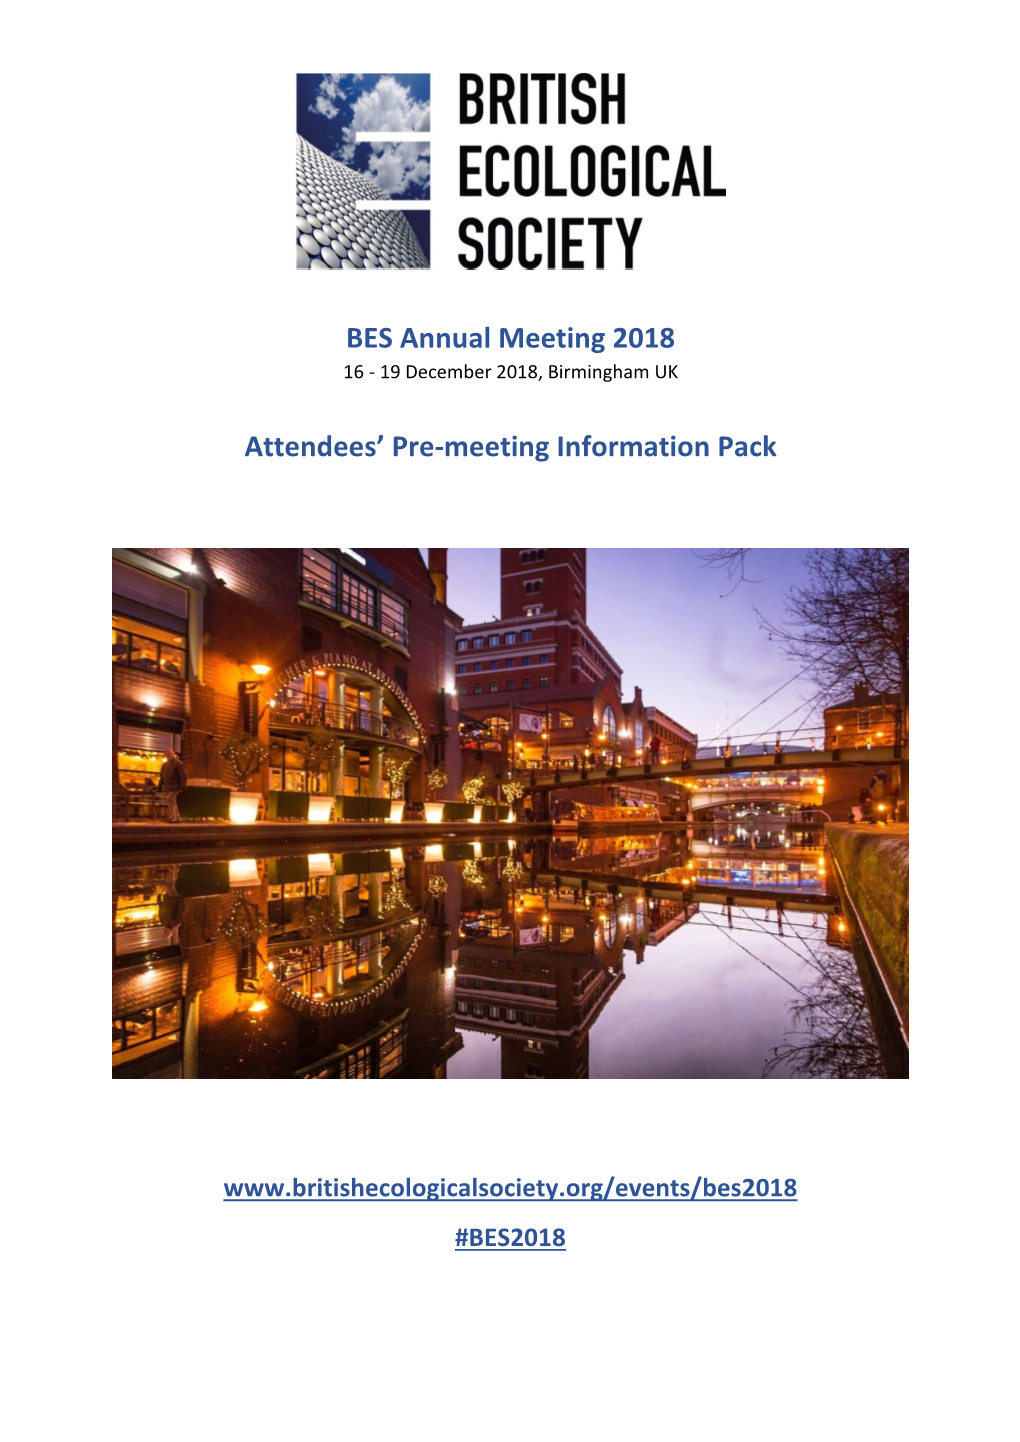 BES Annual Meeting 2018 Attendees' Pre-Meeting Information Pack